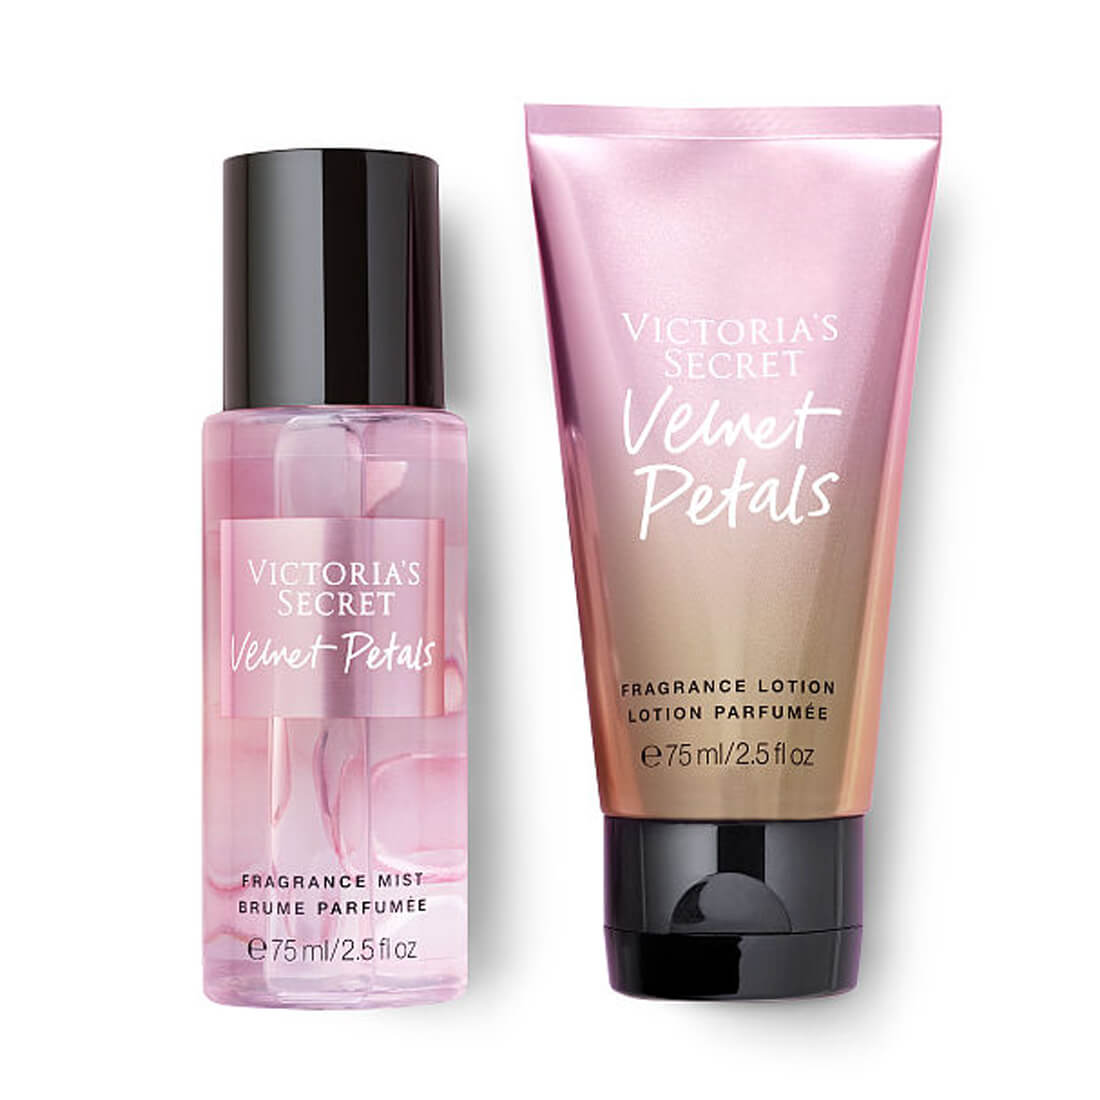 Victoria's Secret Velvet Petals Fragrance Gift Set Mist & Lotion